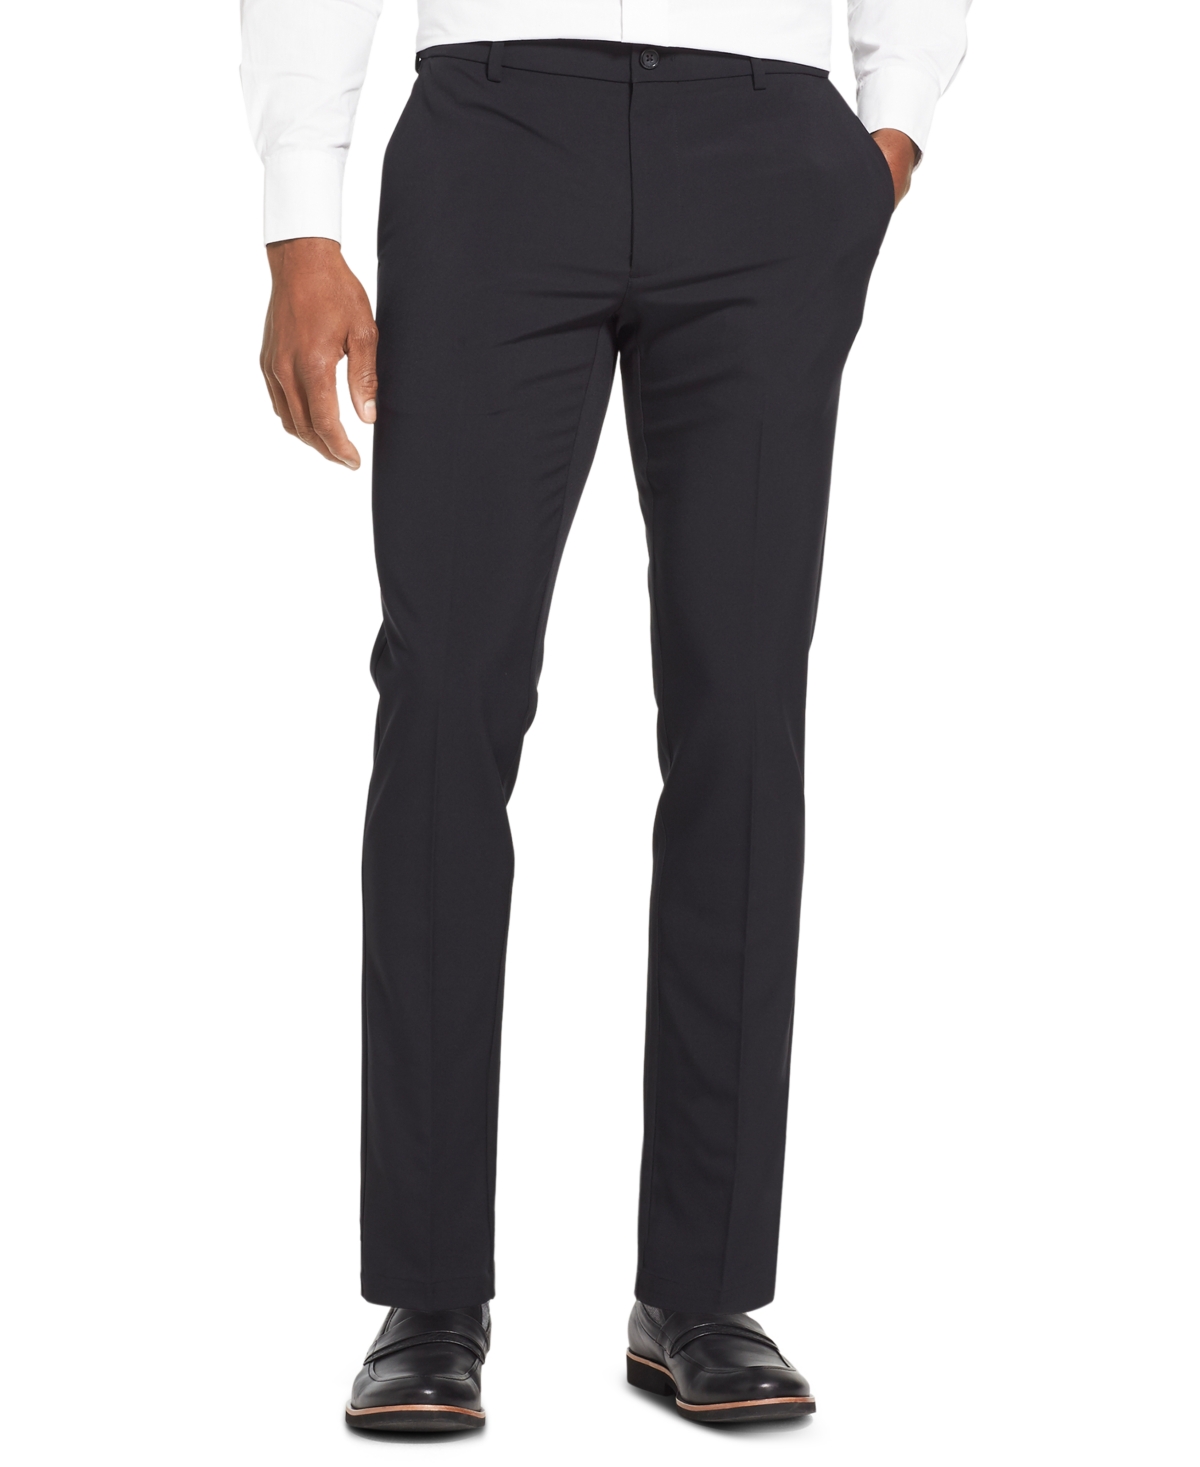 Men's Flex 3 Slim-Fit 4-Way Performance Stretch Non-Iron Flat-Front Dress Pants - Black